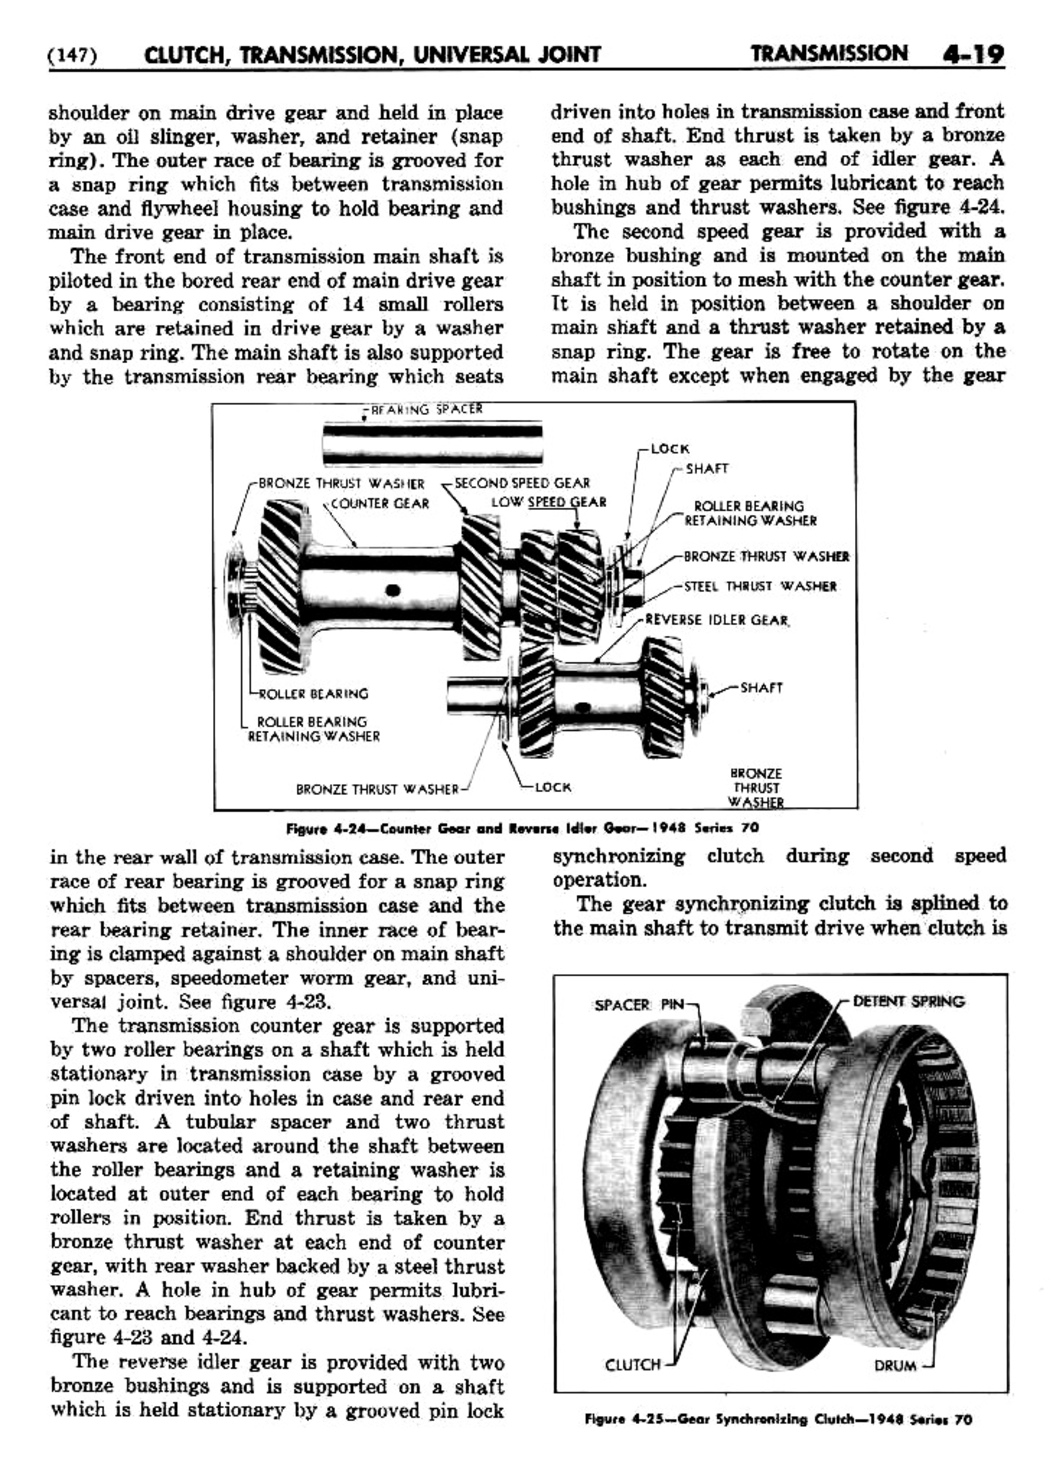 n_05 1948 Buick Shop Manual - Transmission-019-019.jpg